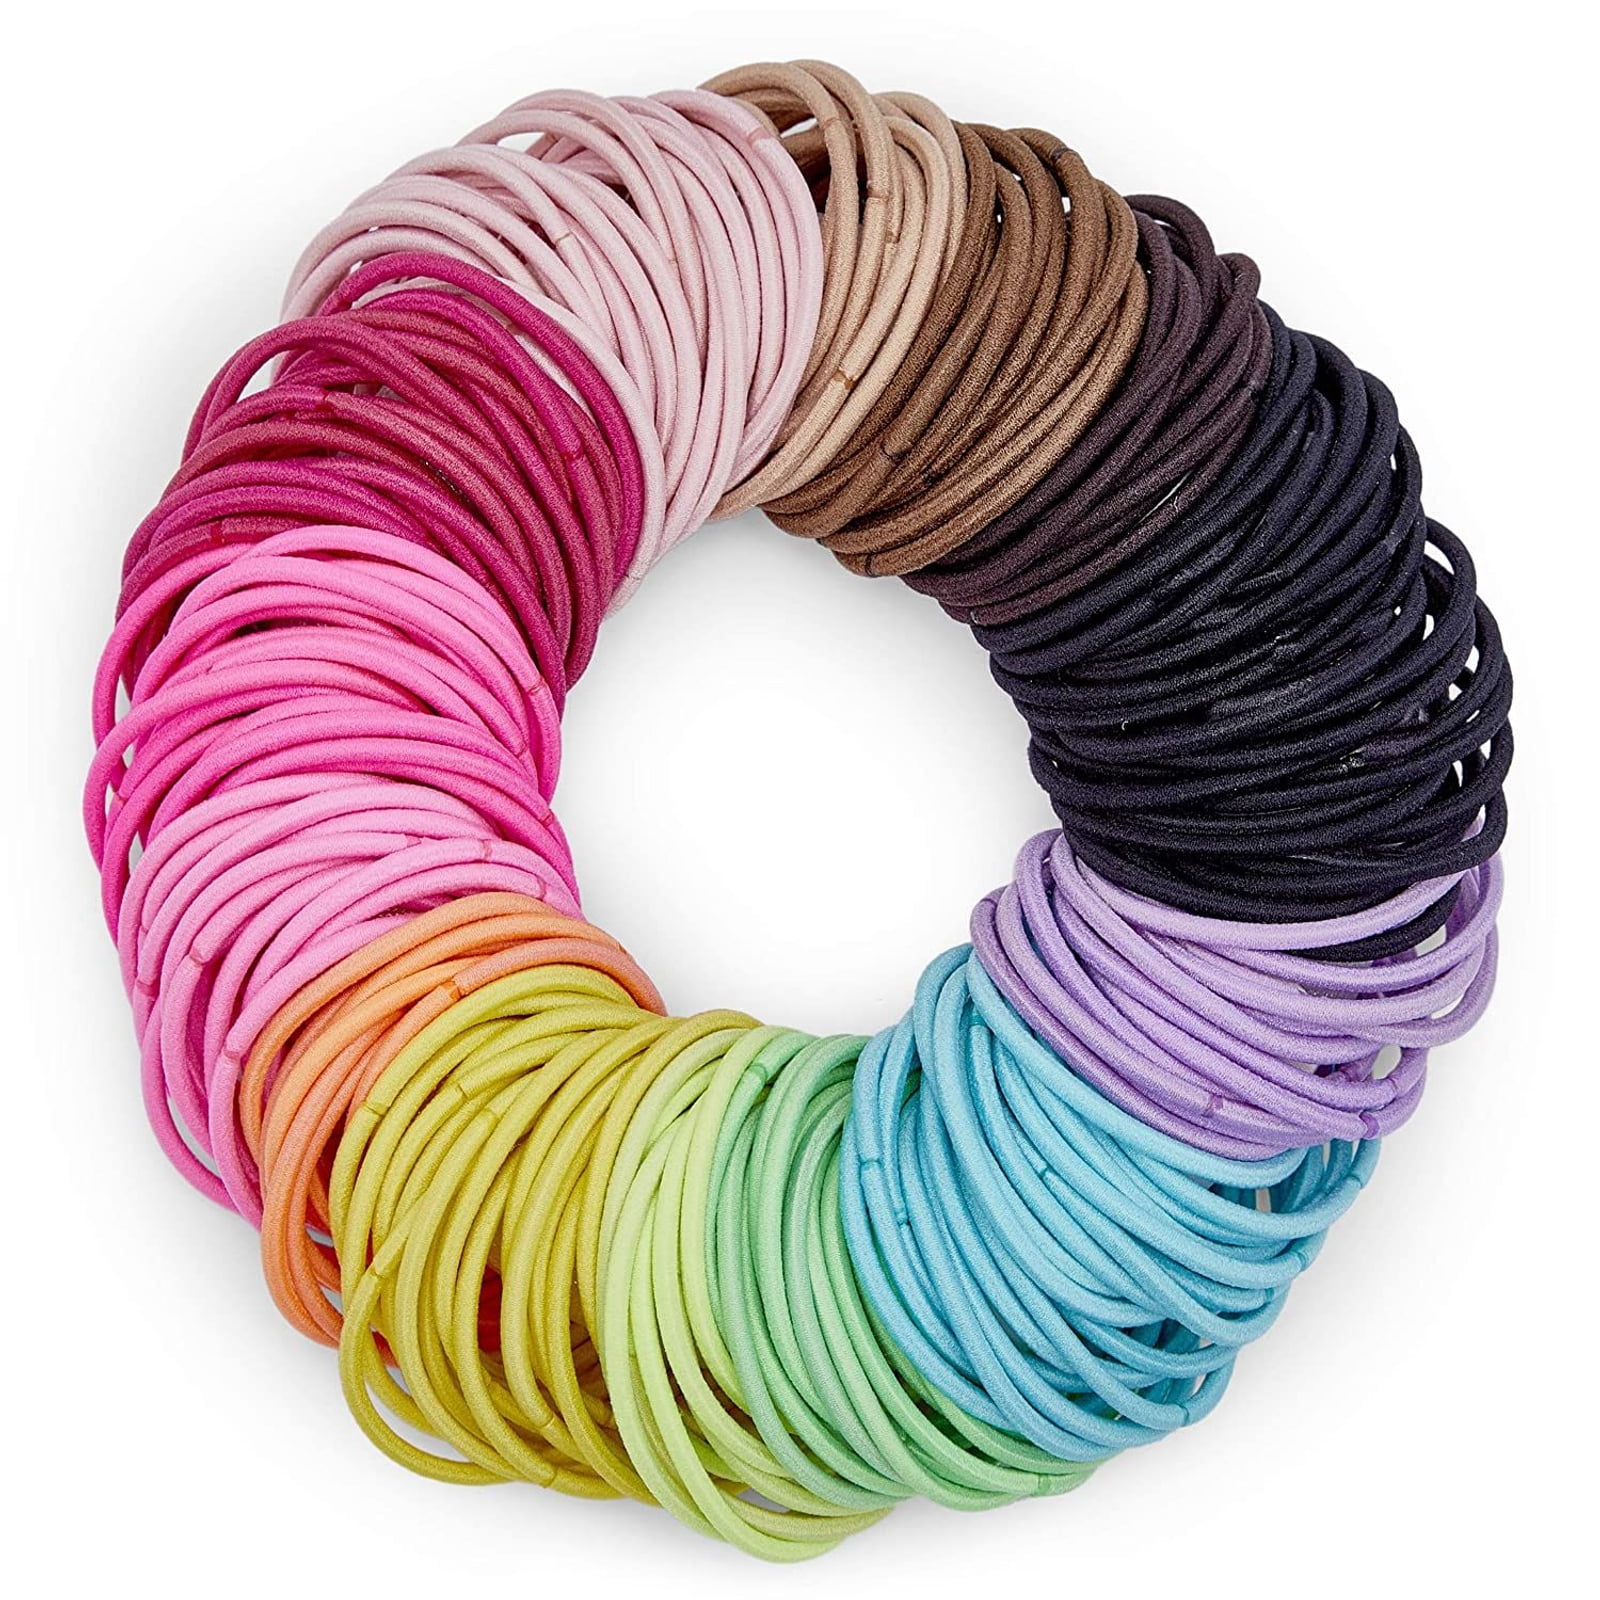 200 Pack No Metal Elastic Hair Ties Bulk, Colorful Hair Bands Ponytail  Holders for Women Girls Accessories, 14 Colors 